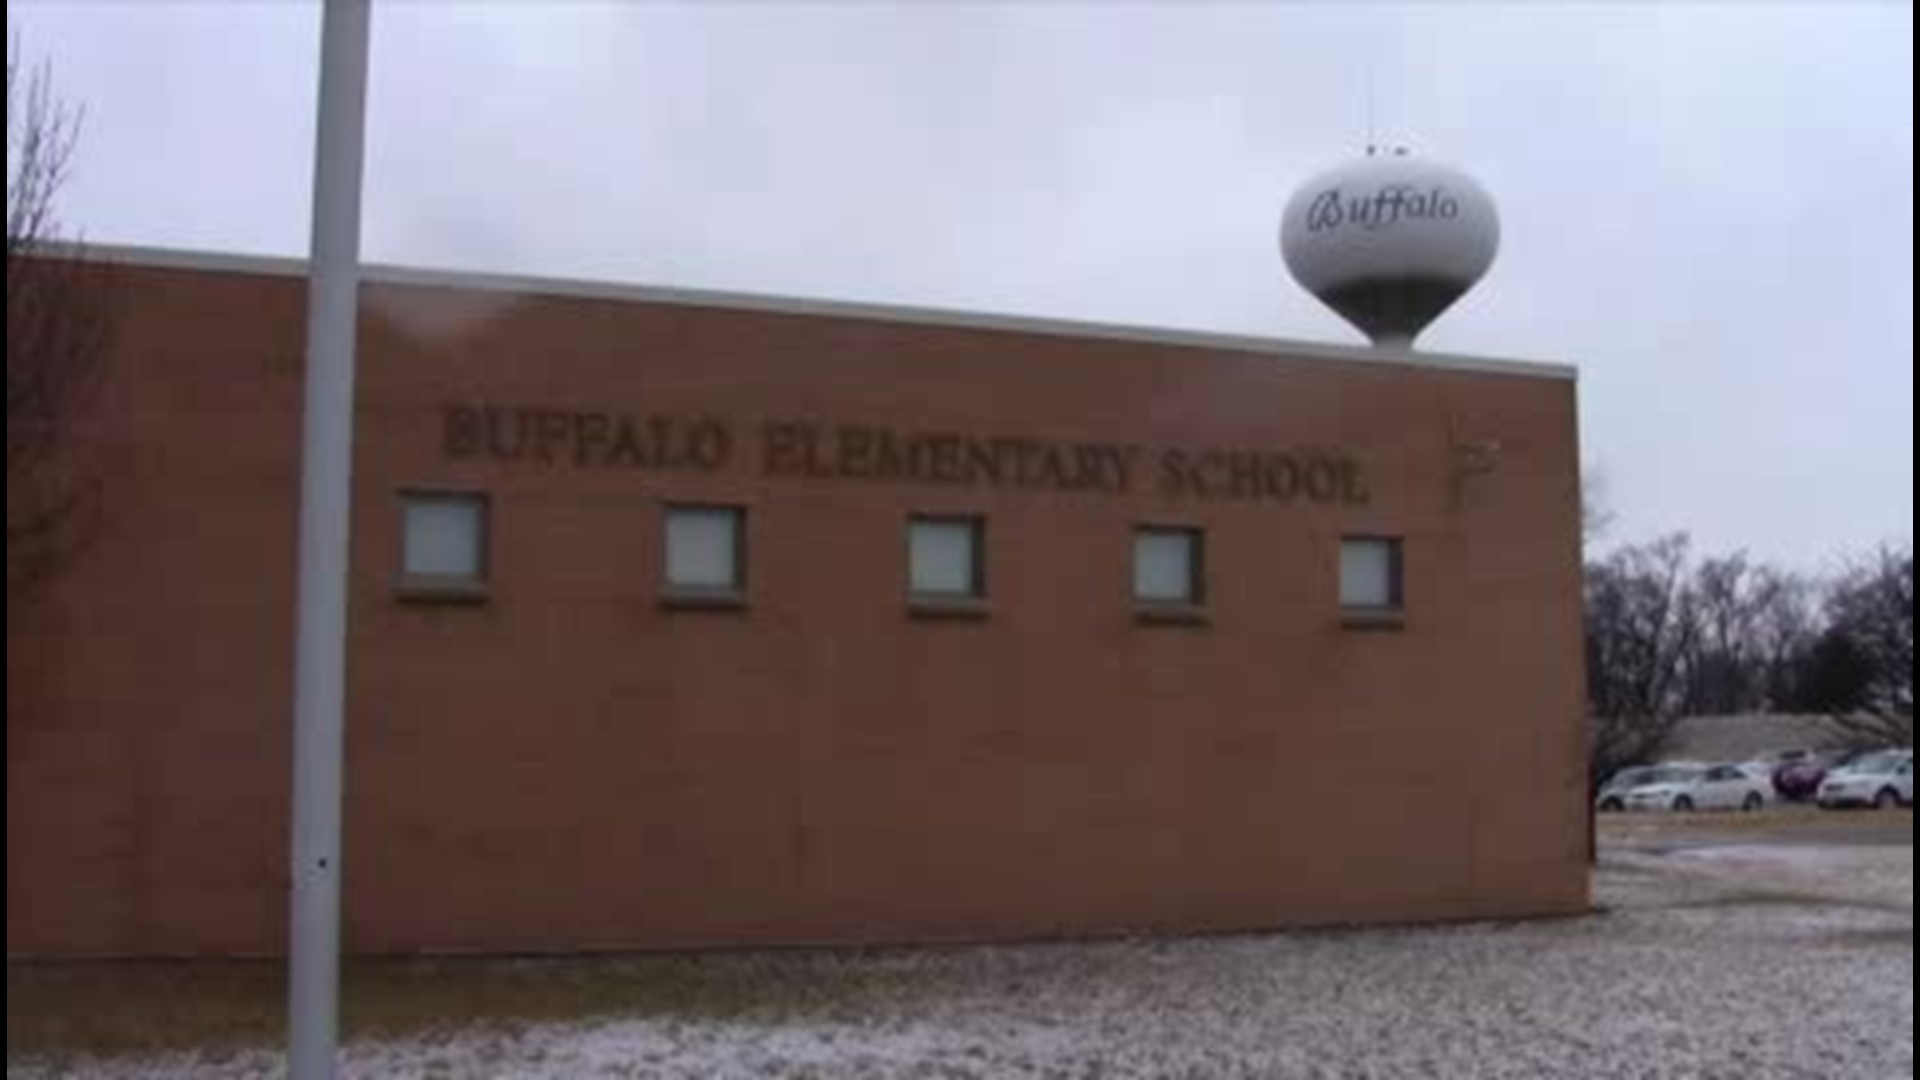 James Visits Buffalo Elementary